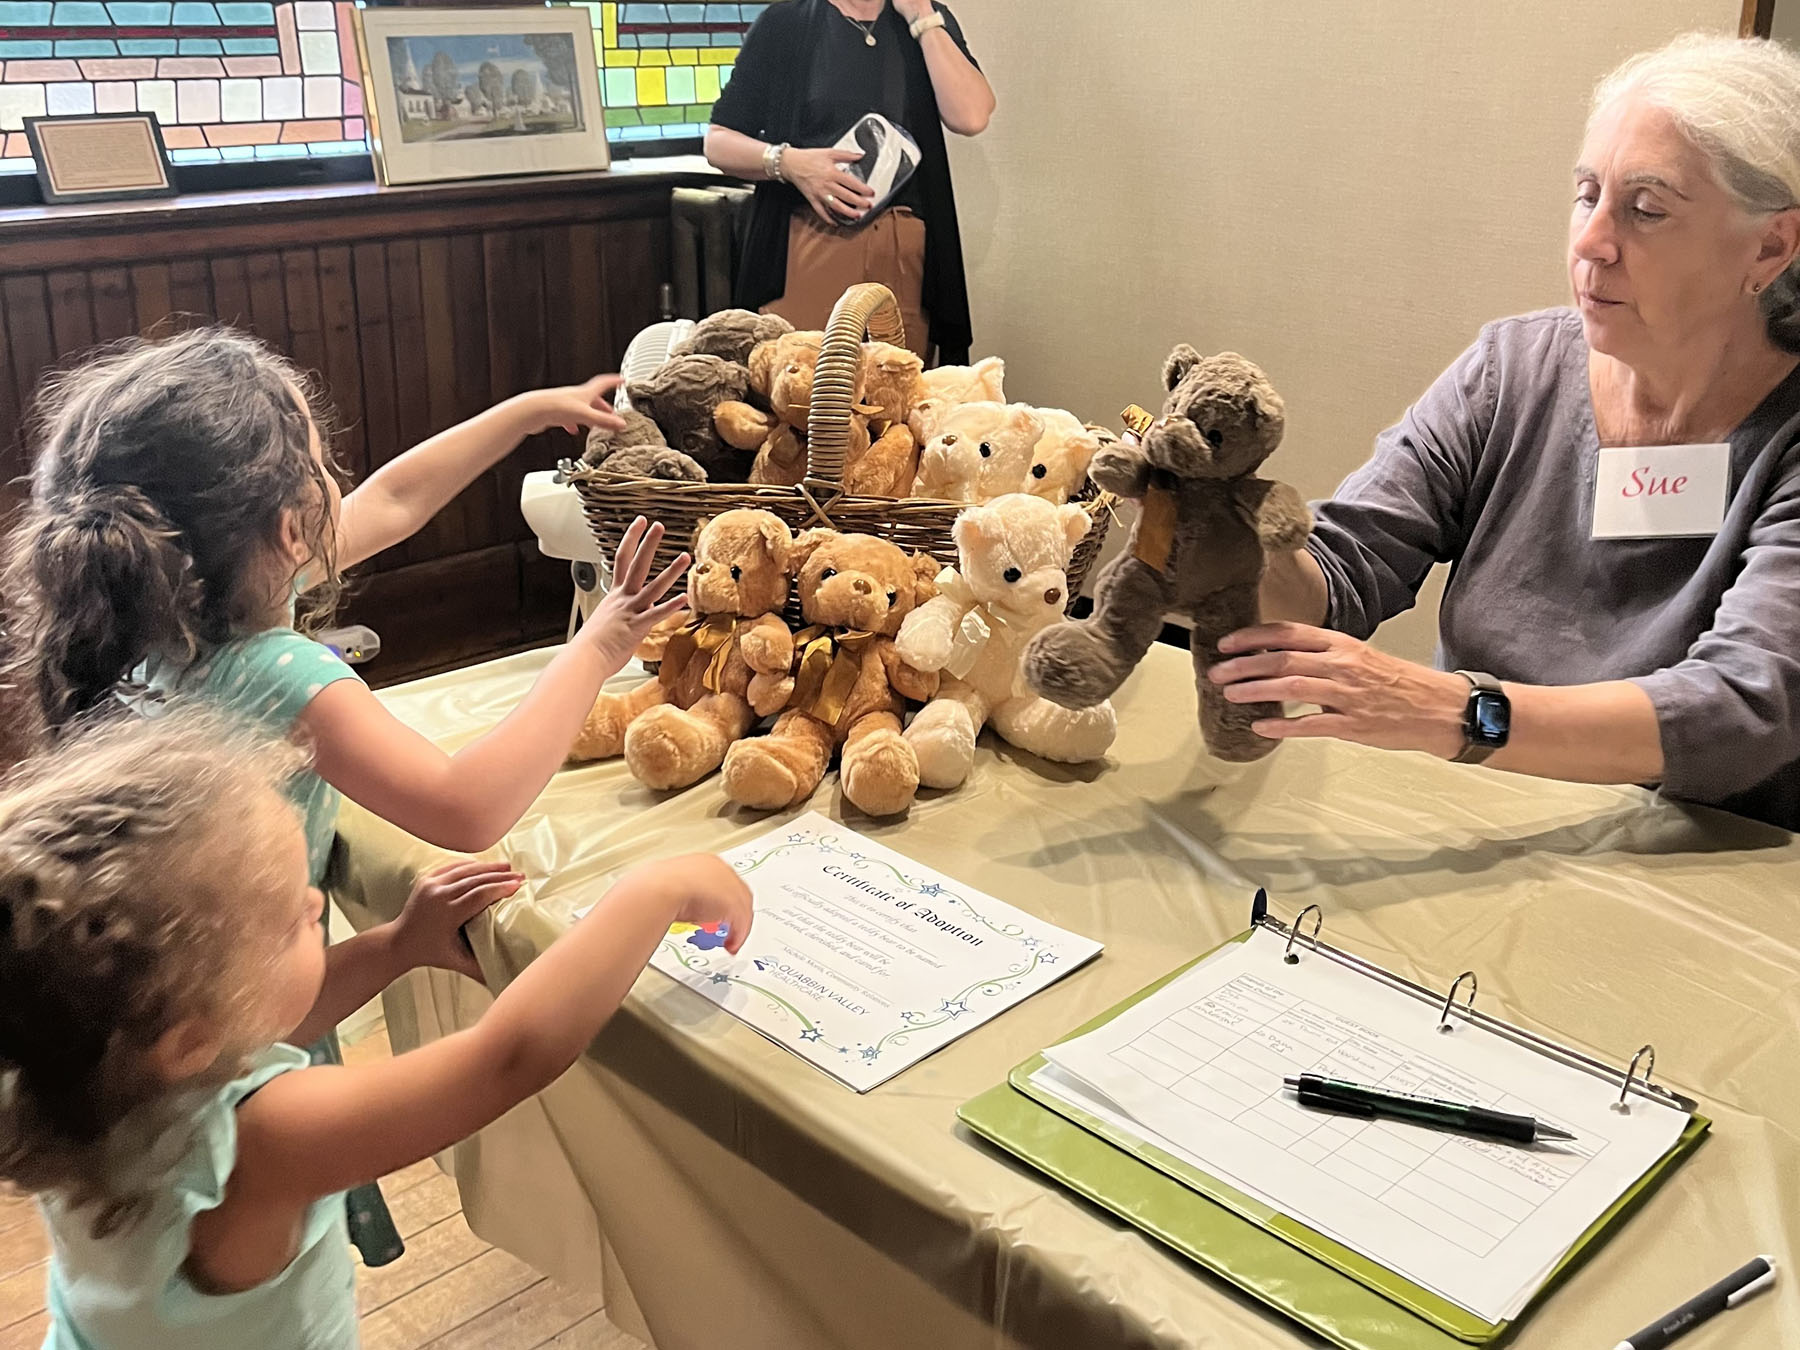 Teddy Bear picnic and clinic